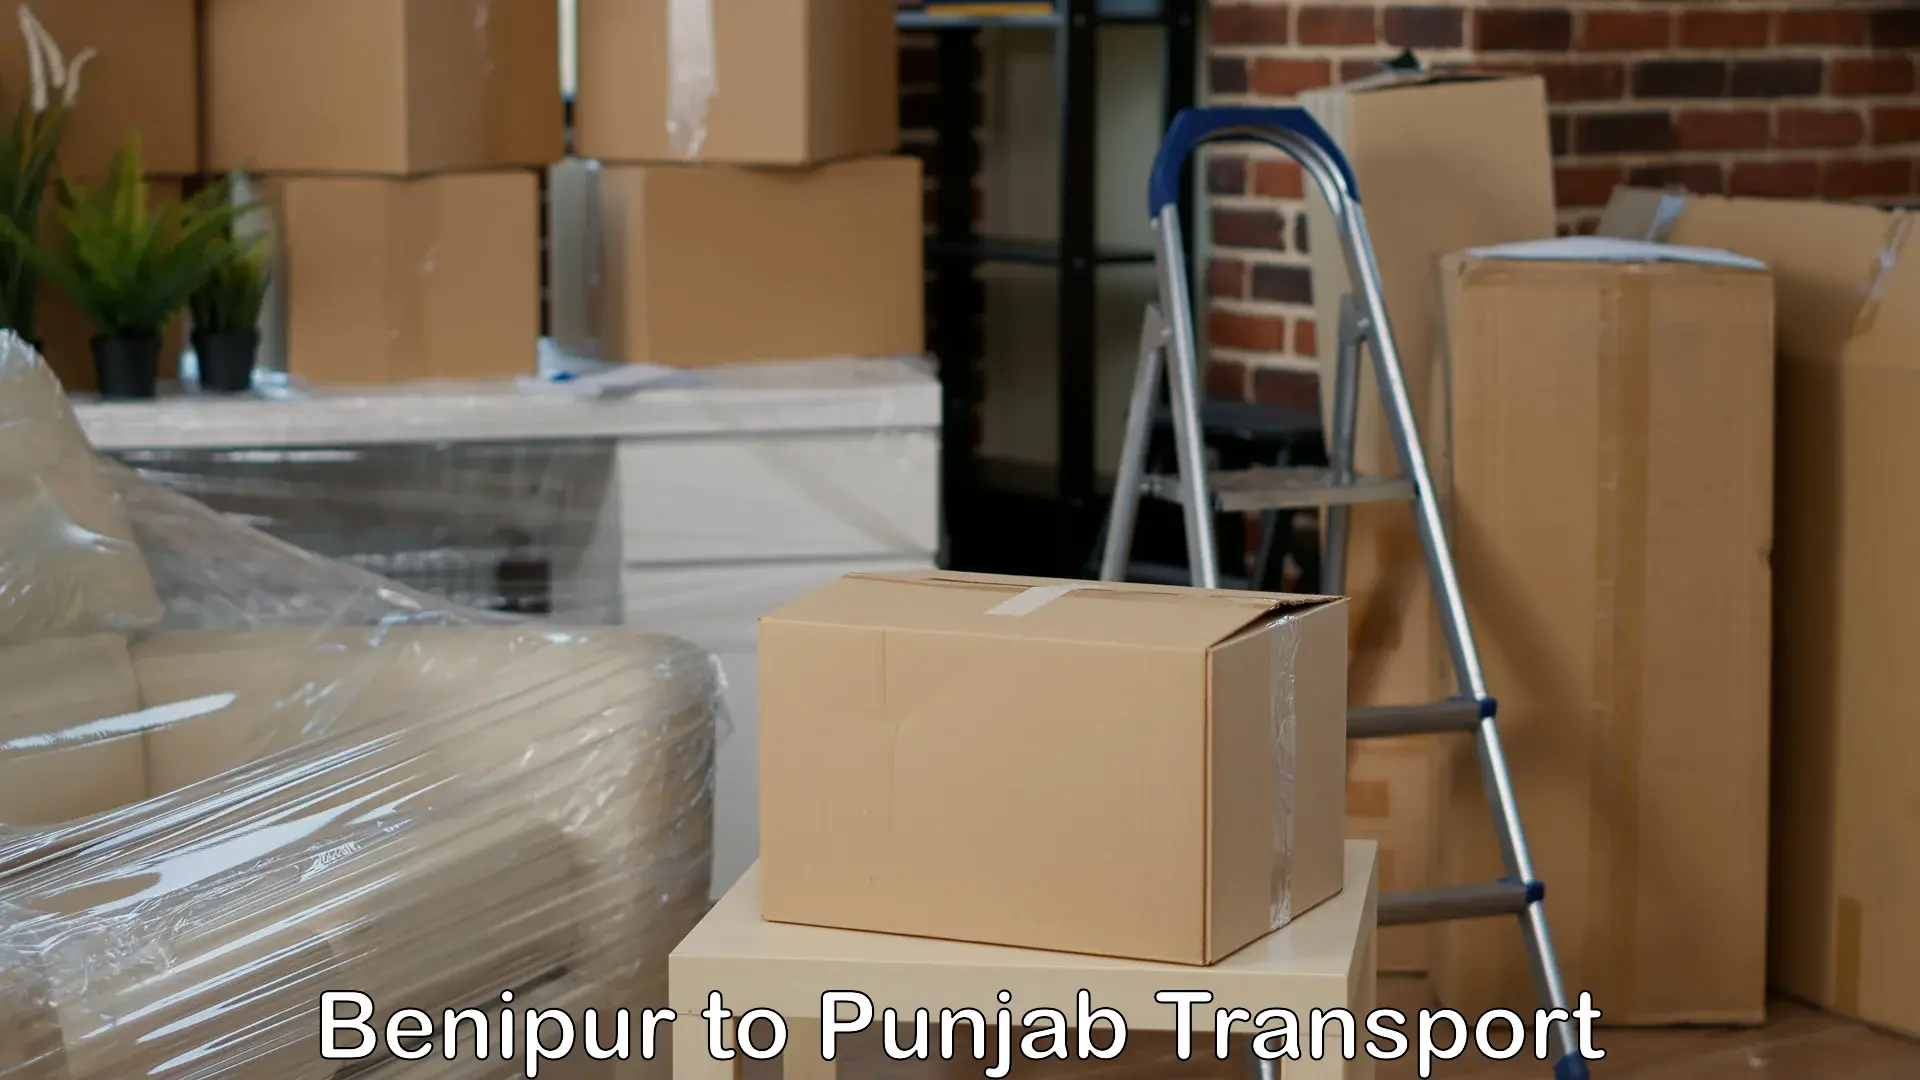 Daily parcel service transport in Benipur to Faridkot